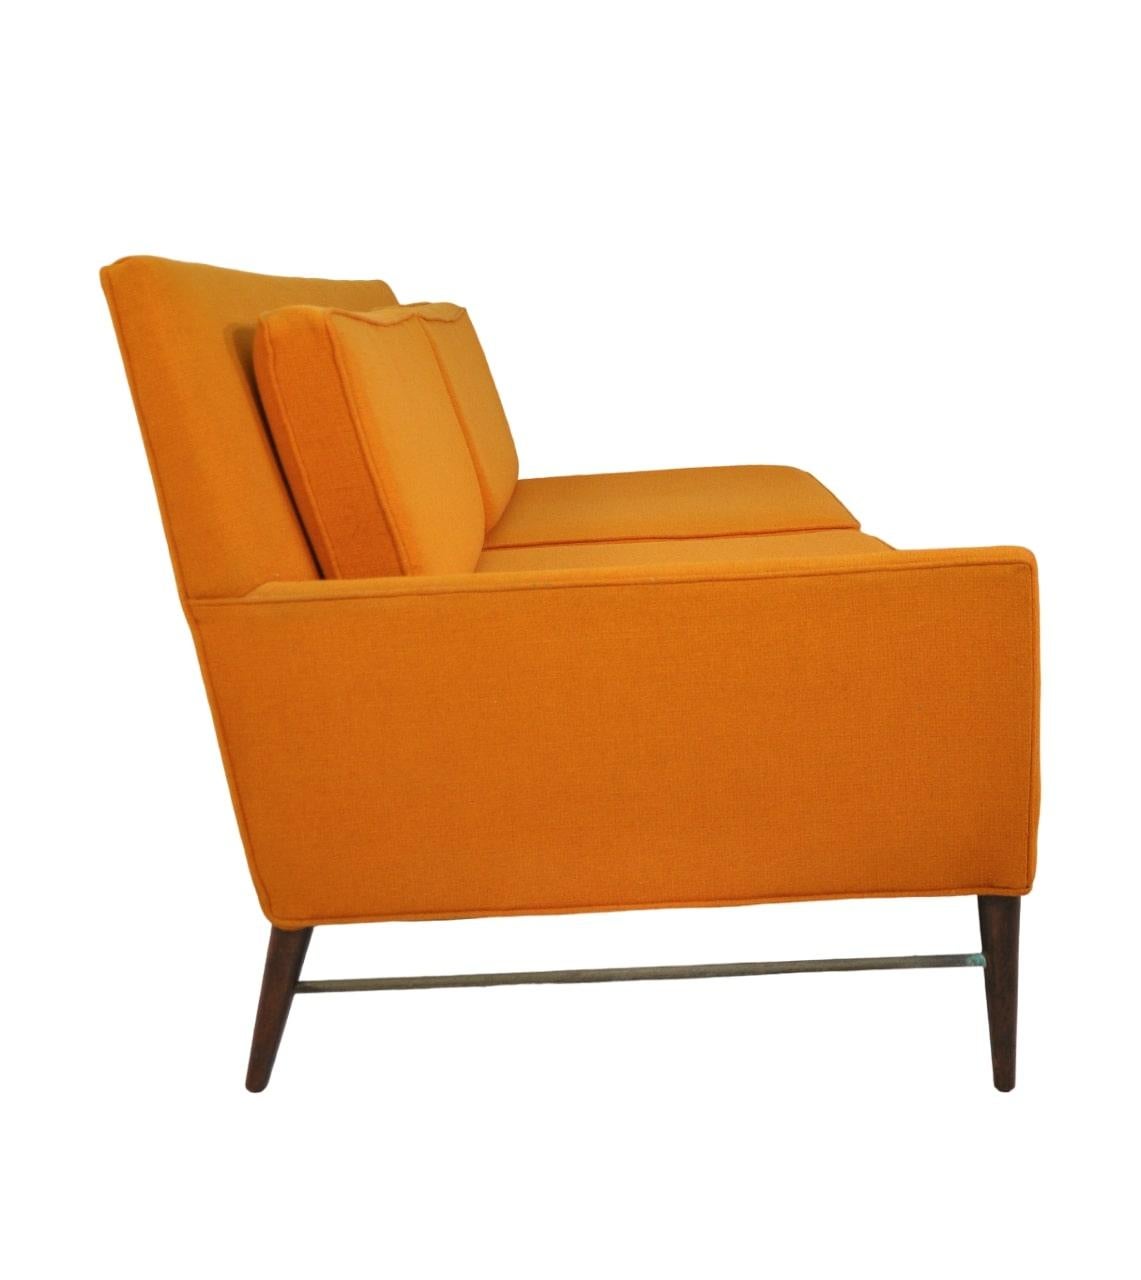 American McCobb Walnut and Brass Burnt Orange Sectional Sofa For Sale